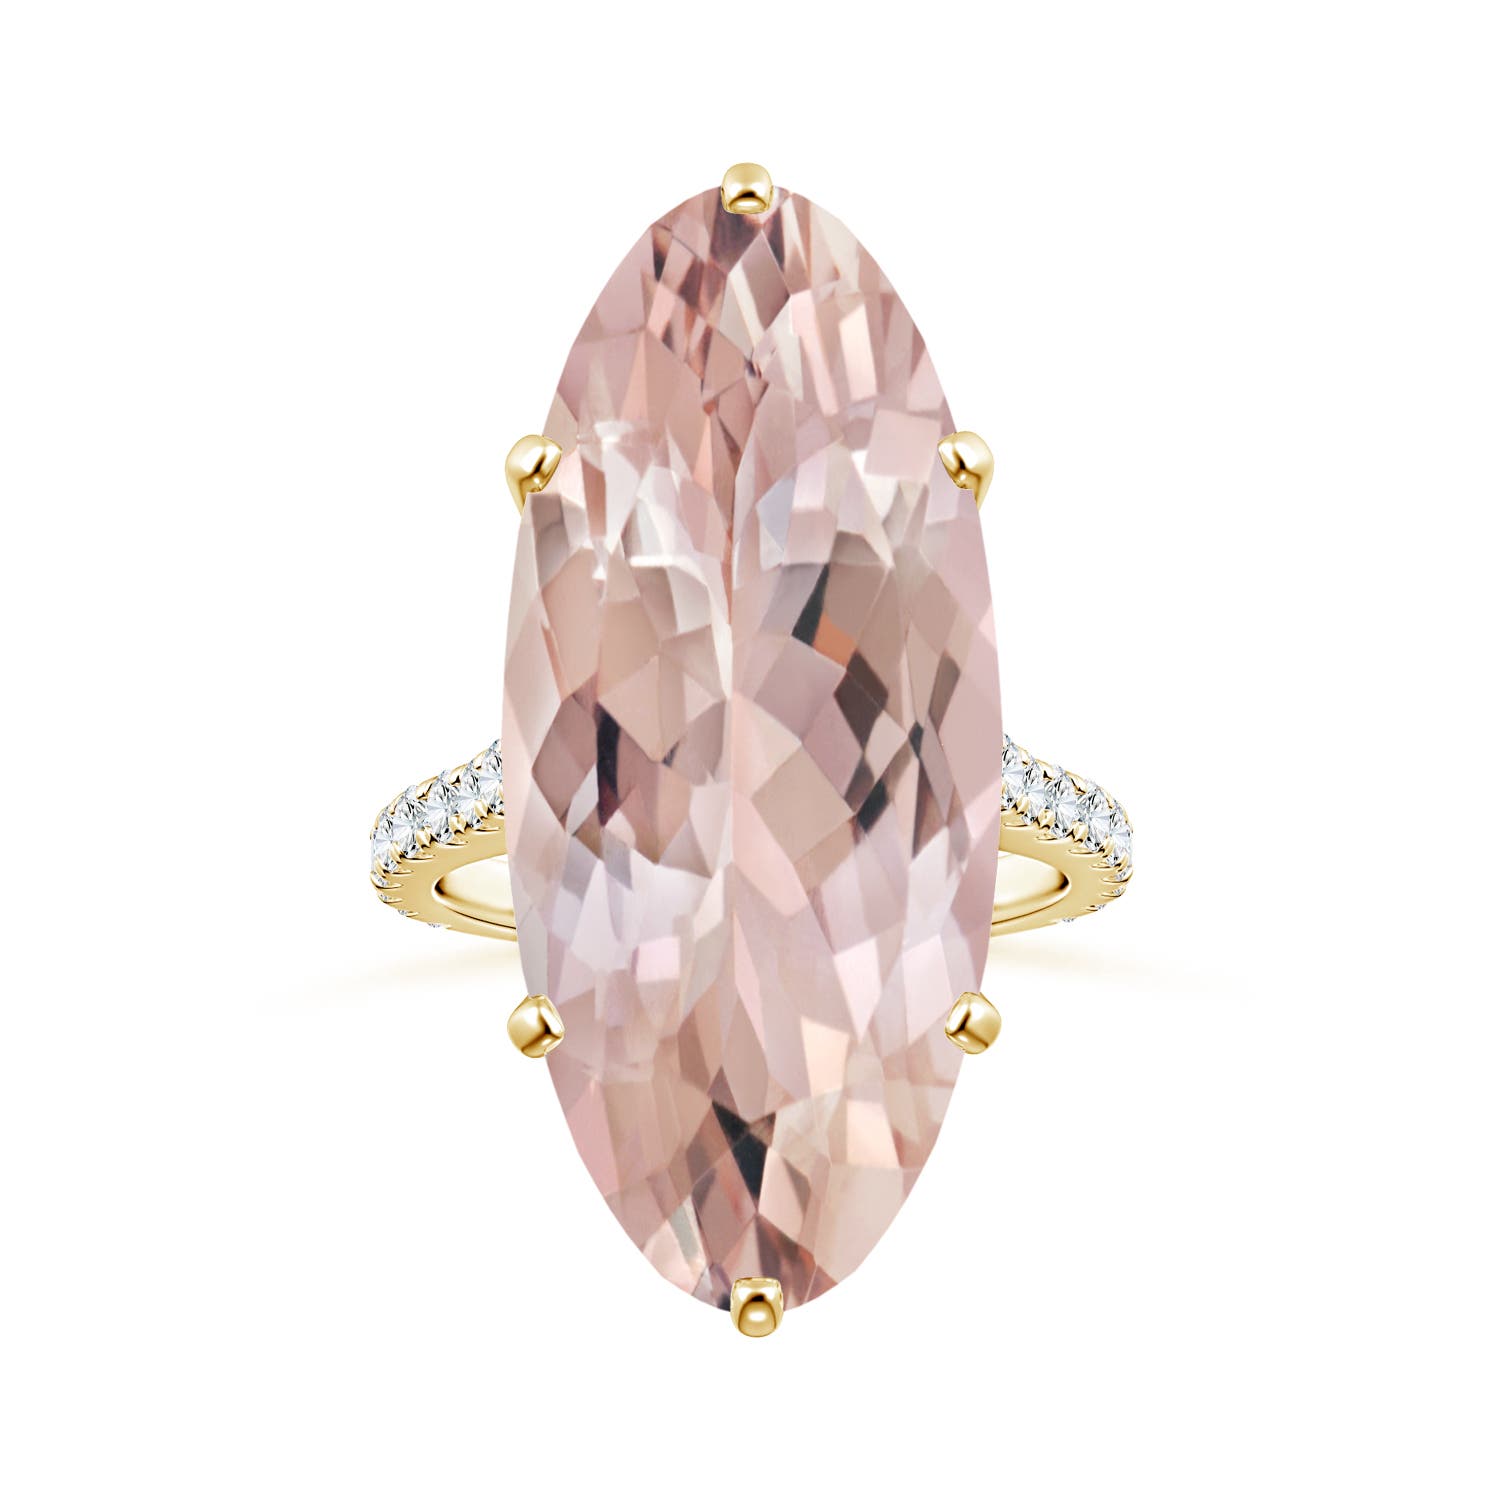 Peg-set gia certified oval with diamonds angara morganite ring